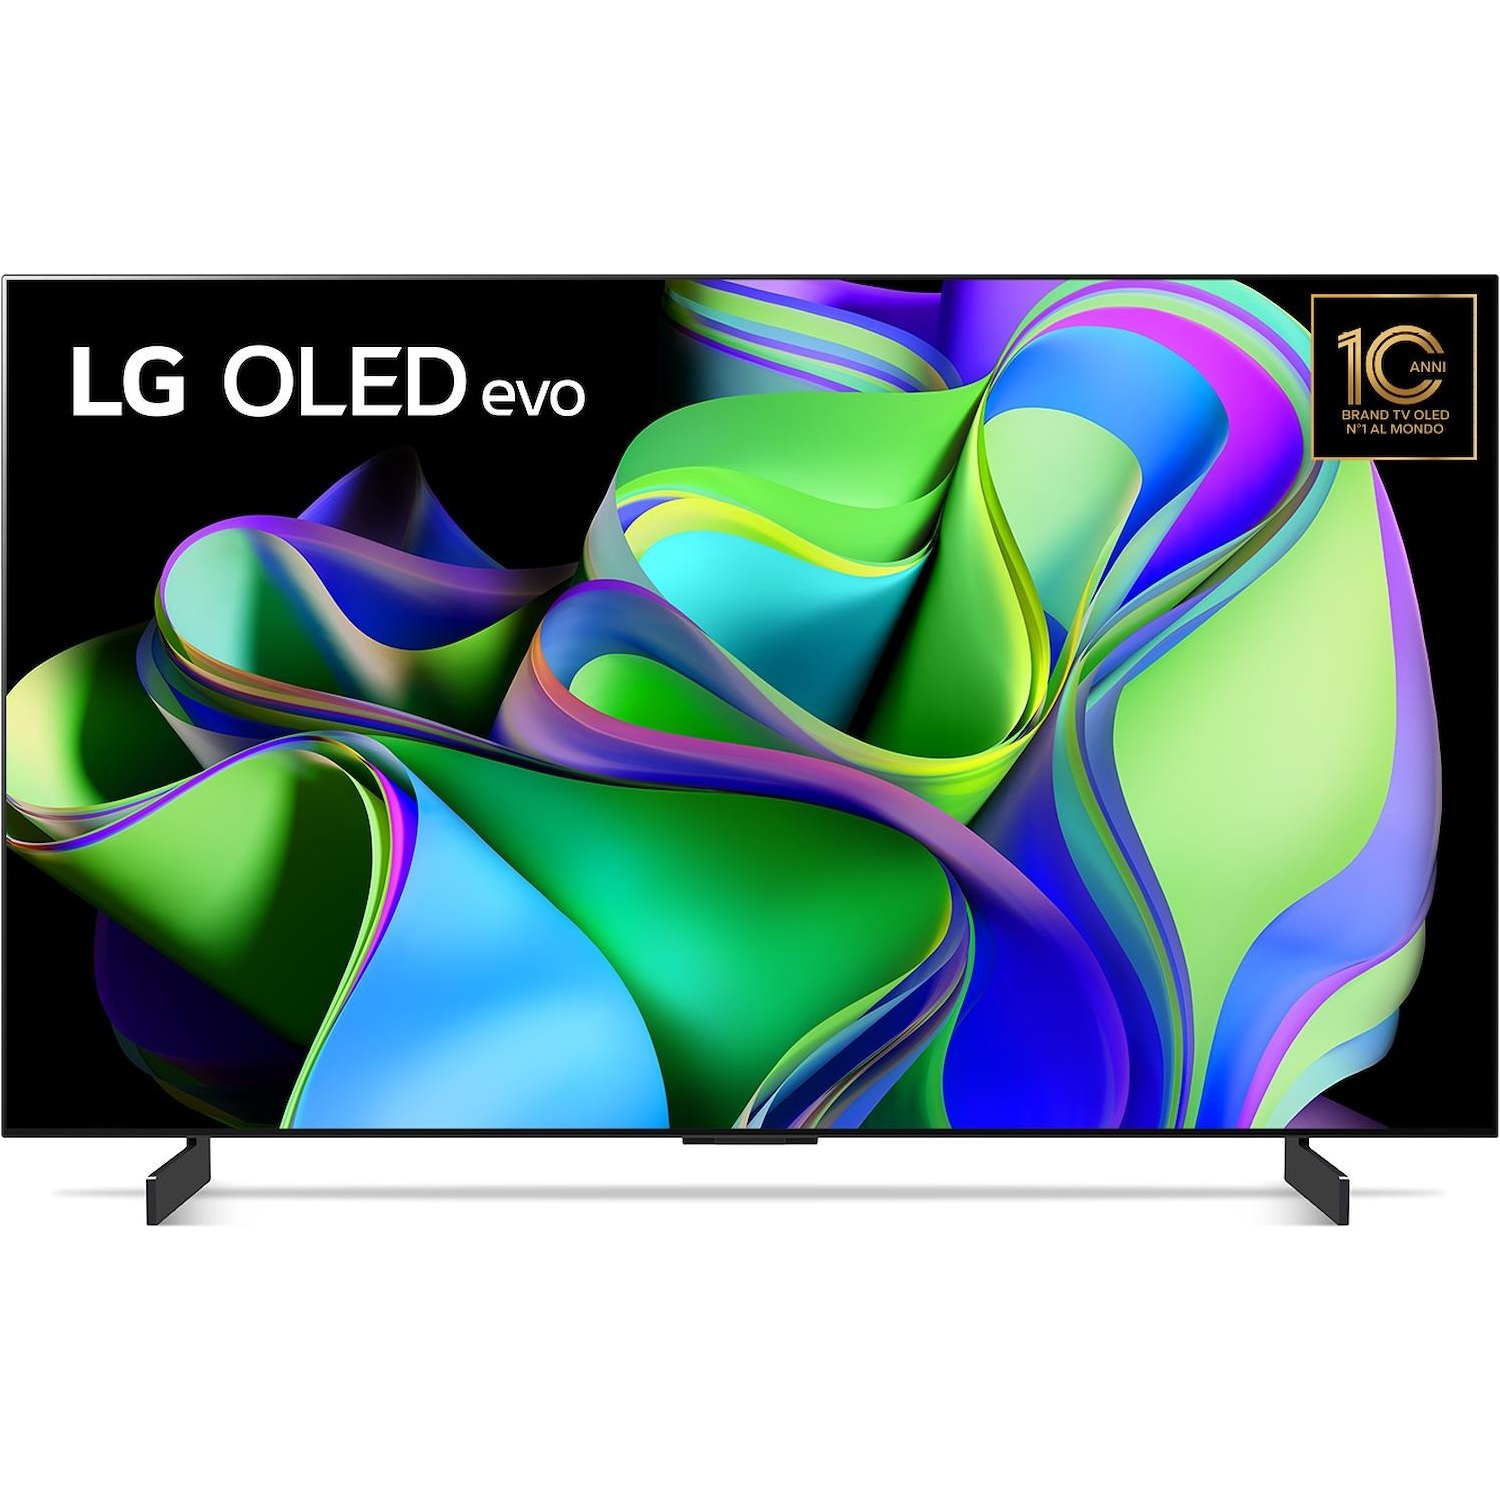 Immagine per TV OLED LG OLED42C34 Calibrato 4K e FULL HD da DIMOStore